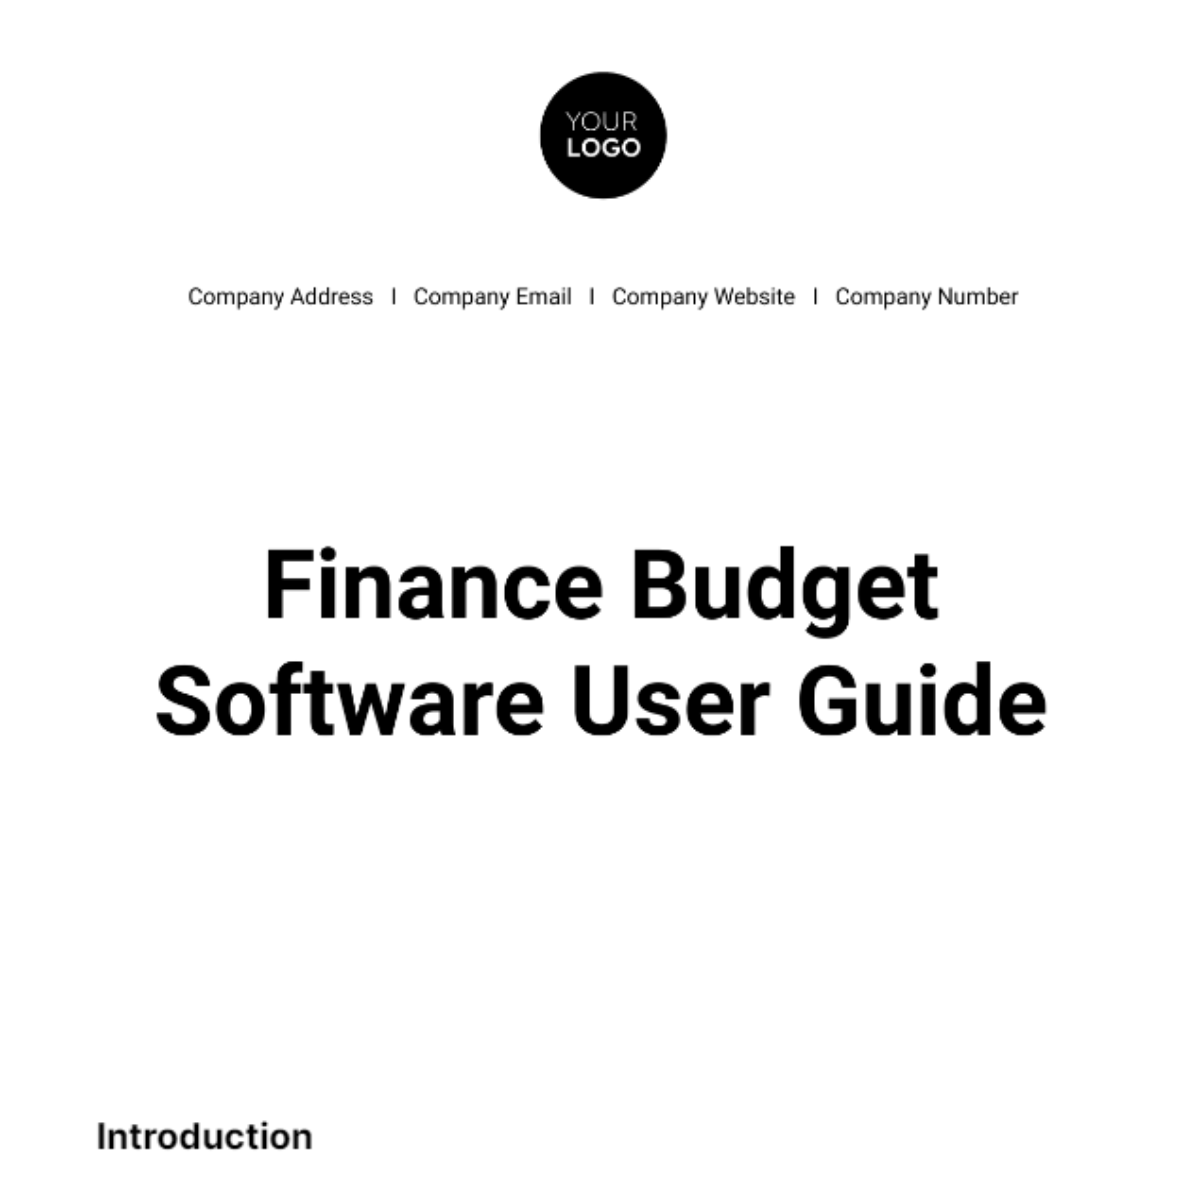 Finance Budget Software User Guide Template